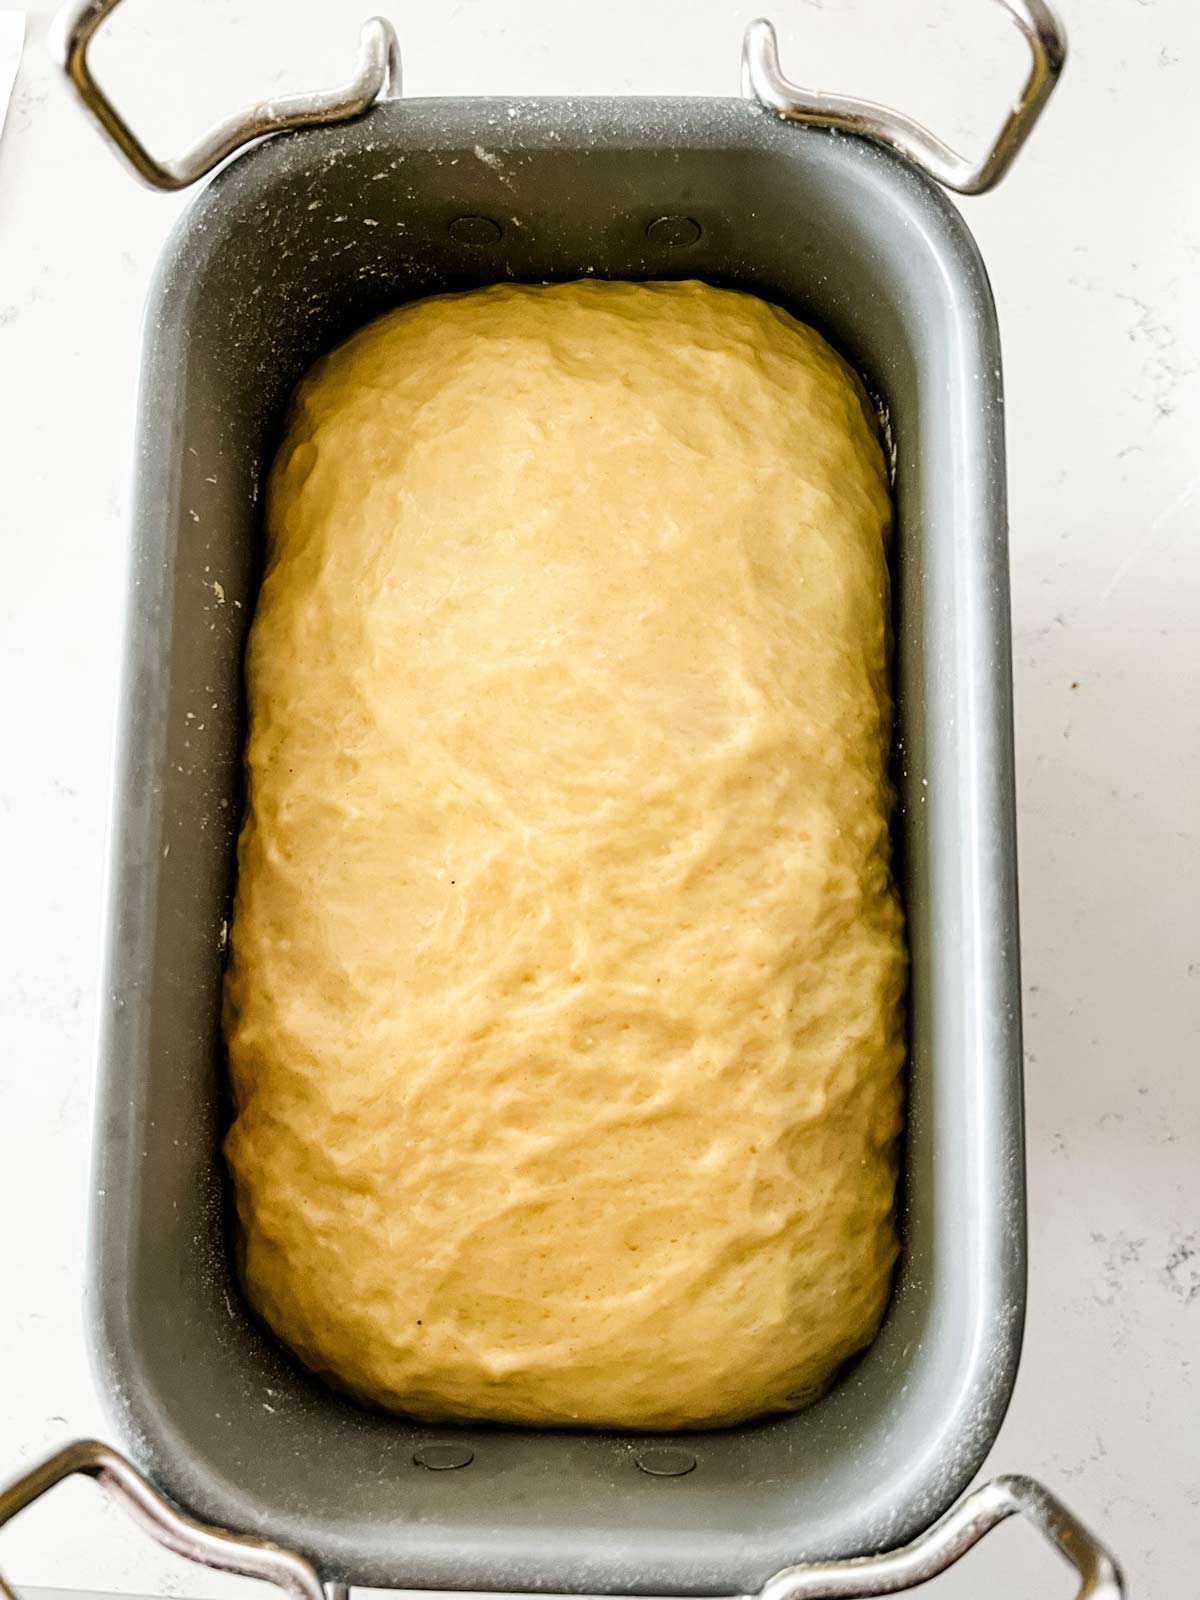 White bread that has risen in a bread machine.